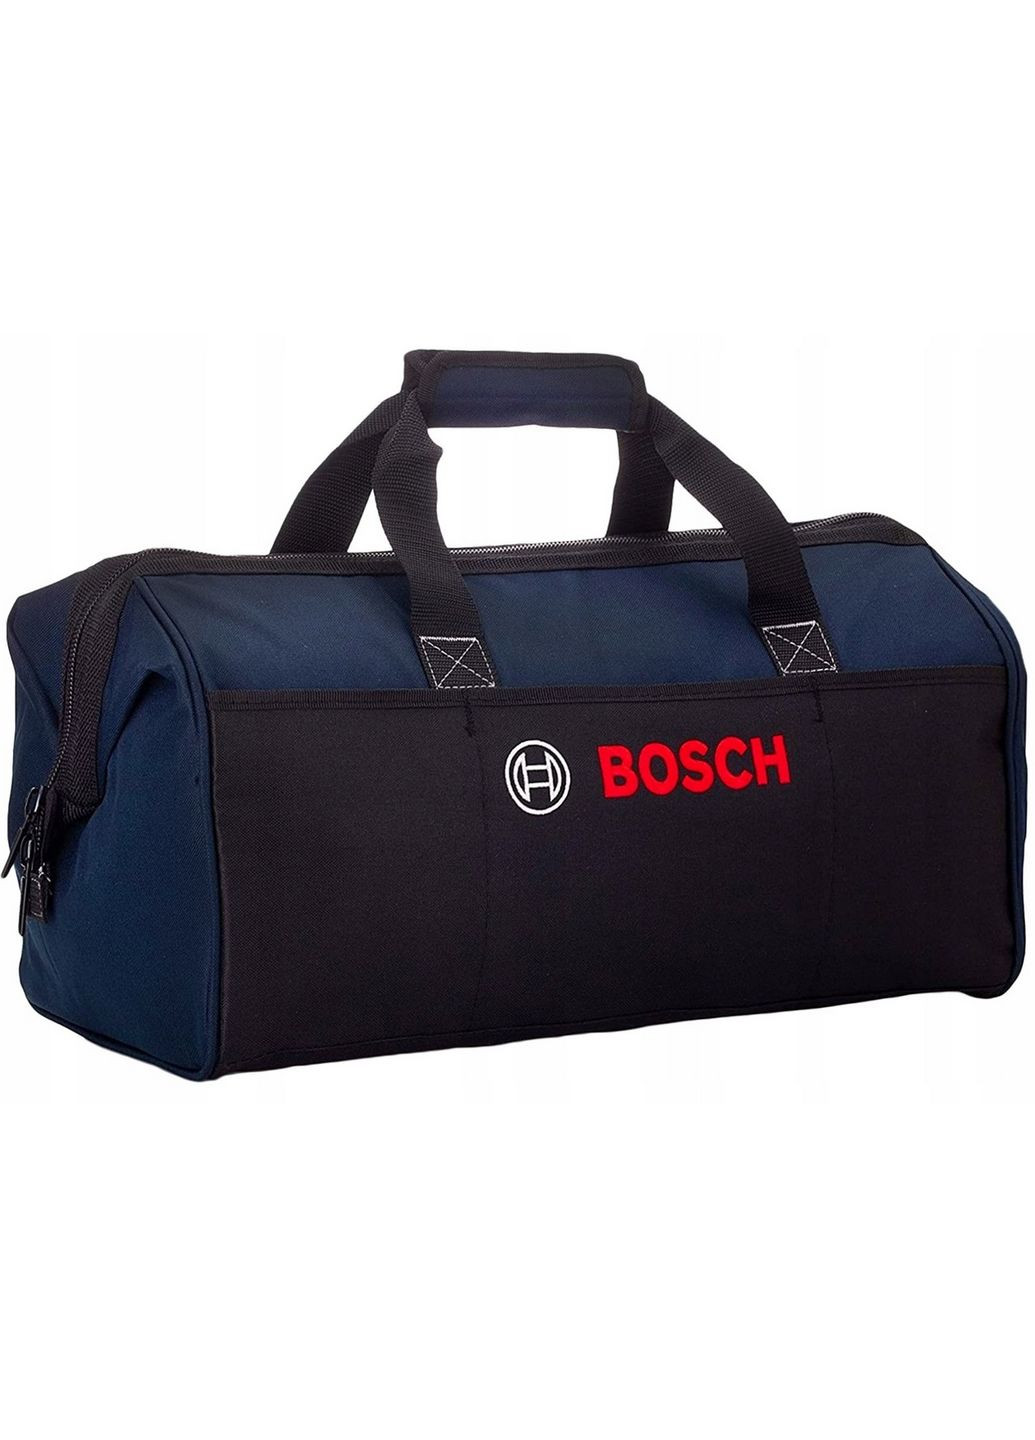 Робоча сумка для інструментів Bosch (279312304)